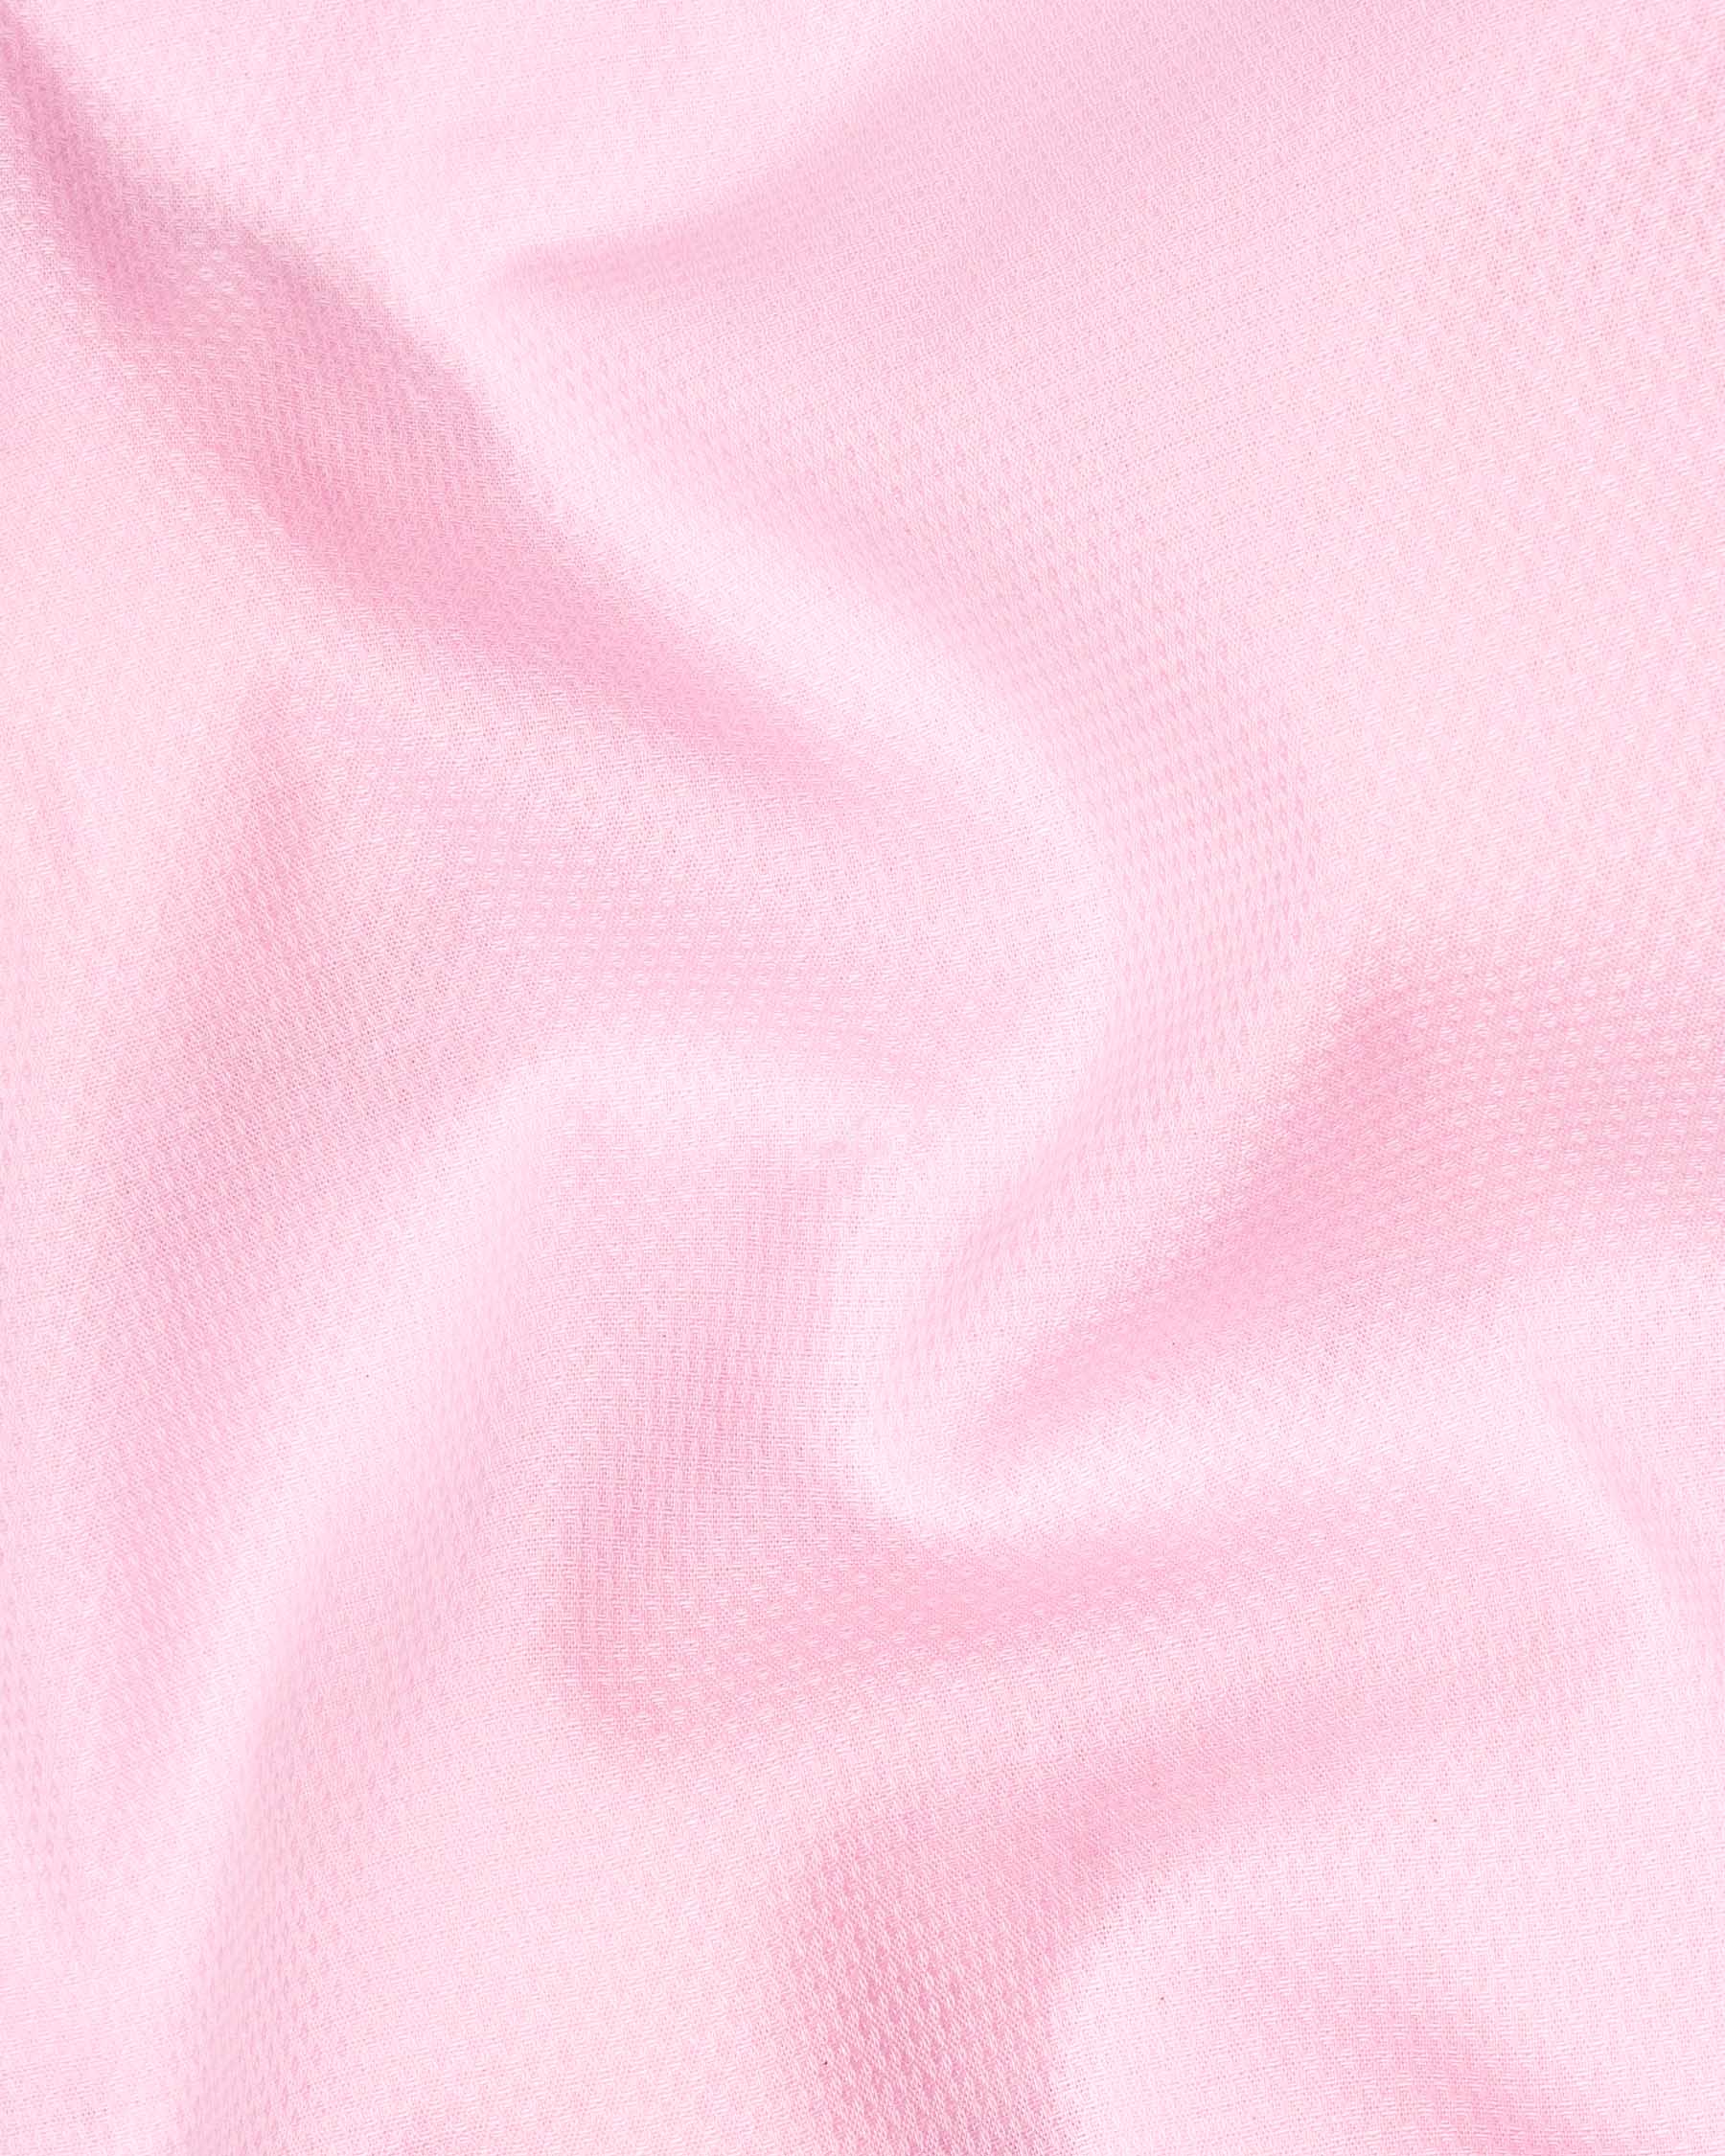 Chantilly Pink Dobby Textured Premium Giza Cotton Shirt 6207-CA-CLOTH-P-38, 6207-CA-CLOTH-P-H-38, 6207-CA-CLOTH-P-39, 6207-CA-CLOTH-P-H-39, 6207-CA-CLOTH-P-40, 6207-CA-CLOTH-P-H-40, 6207-CA-CLOTH-P-42, 6207-CA-CLOTH-P-H-42, 6207-CA-CLOTH-P-44, 6207-CA-CLOTH-P-H-44, 6207-CA-CLOTH-P-46, 6207-CA-CLOTH-P-H-46, 6207-CA-CLOTH-P-48, 6207-CA-CLOTH-P-H-48, 6207-CA-CLOTH-P-50, 6207-CA-CLOTH-P-H-50, 6207-CA-CLOTH-P-52, 6207-CA-CLOTH-P-H-52